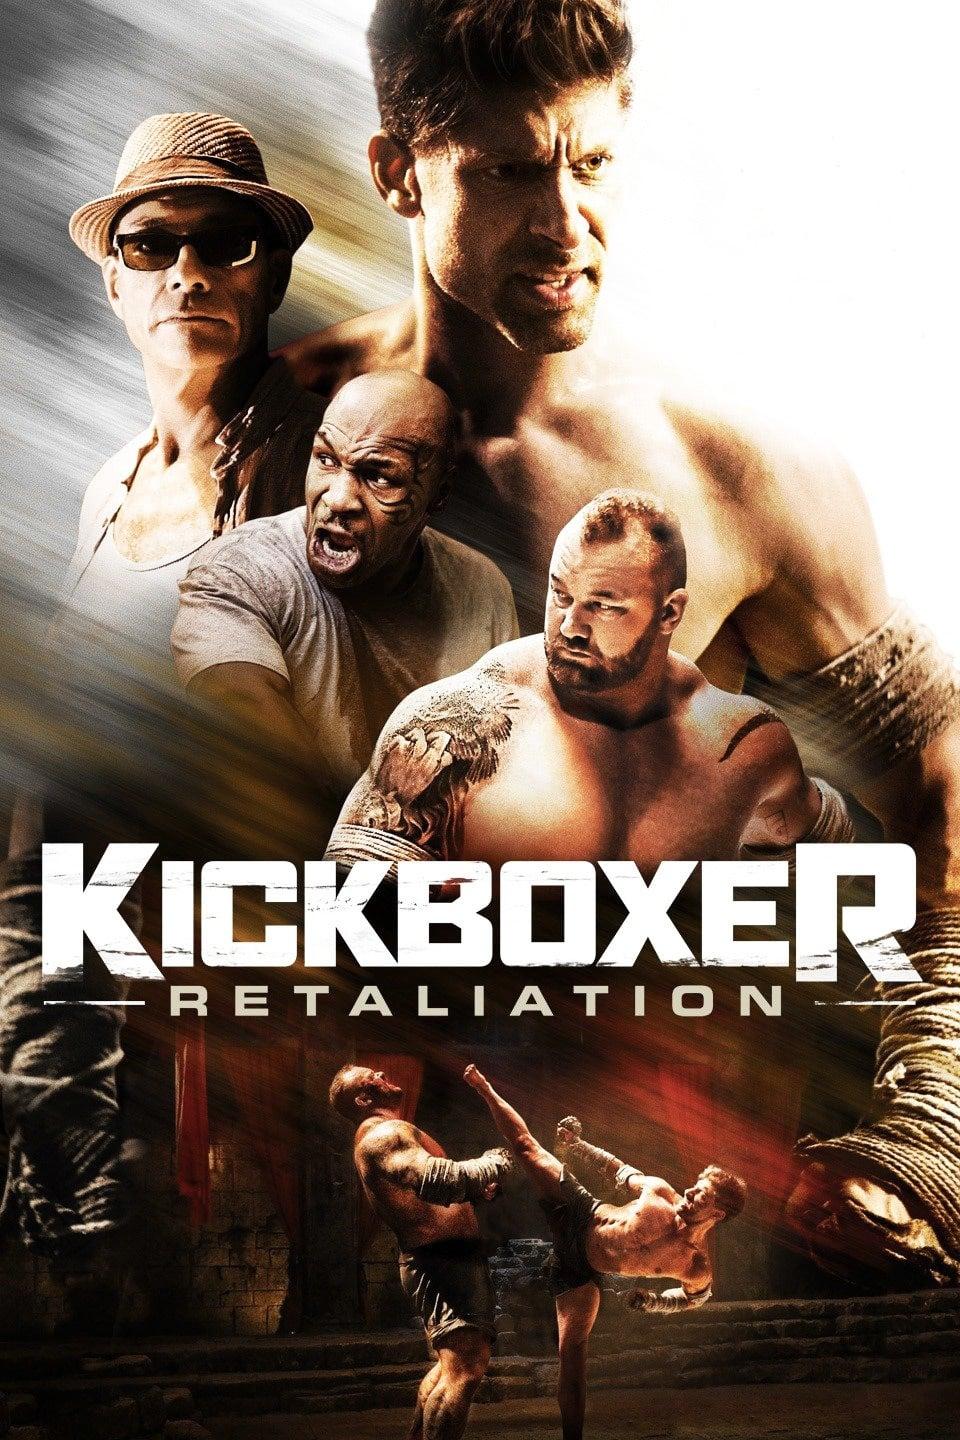 Kickboxer: Retaliation poster